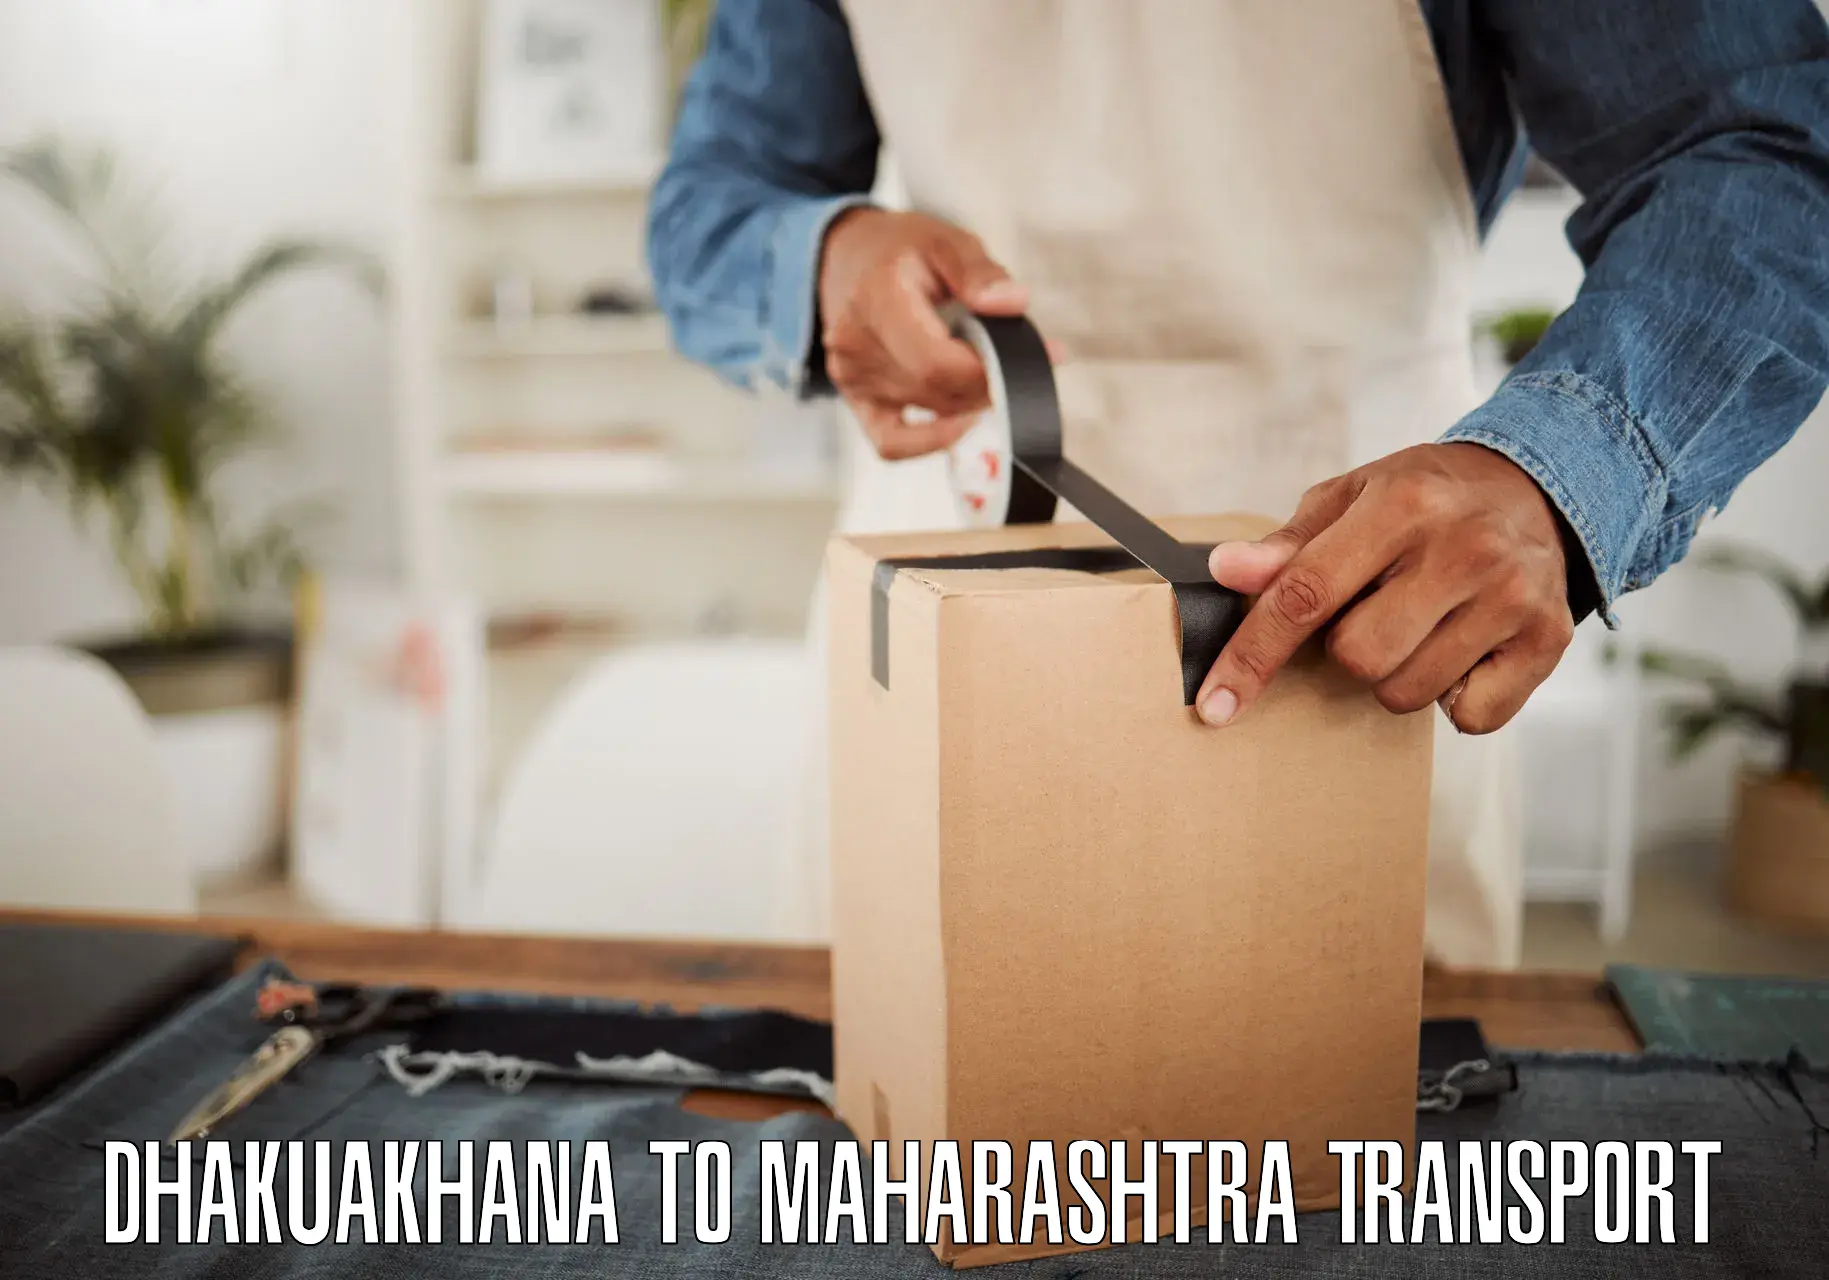 Furniture transport service Dhakuakhana to Maharashtra